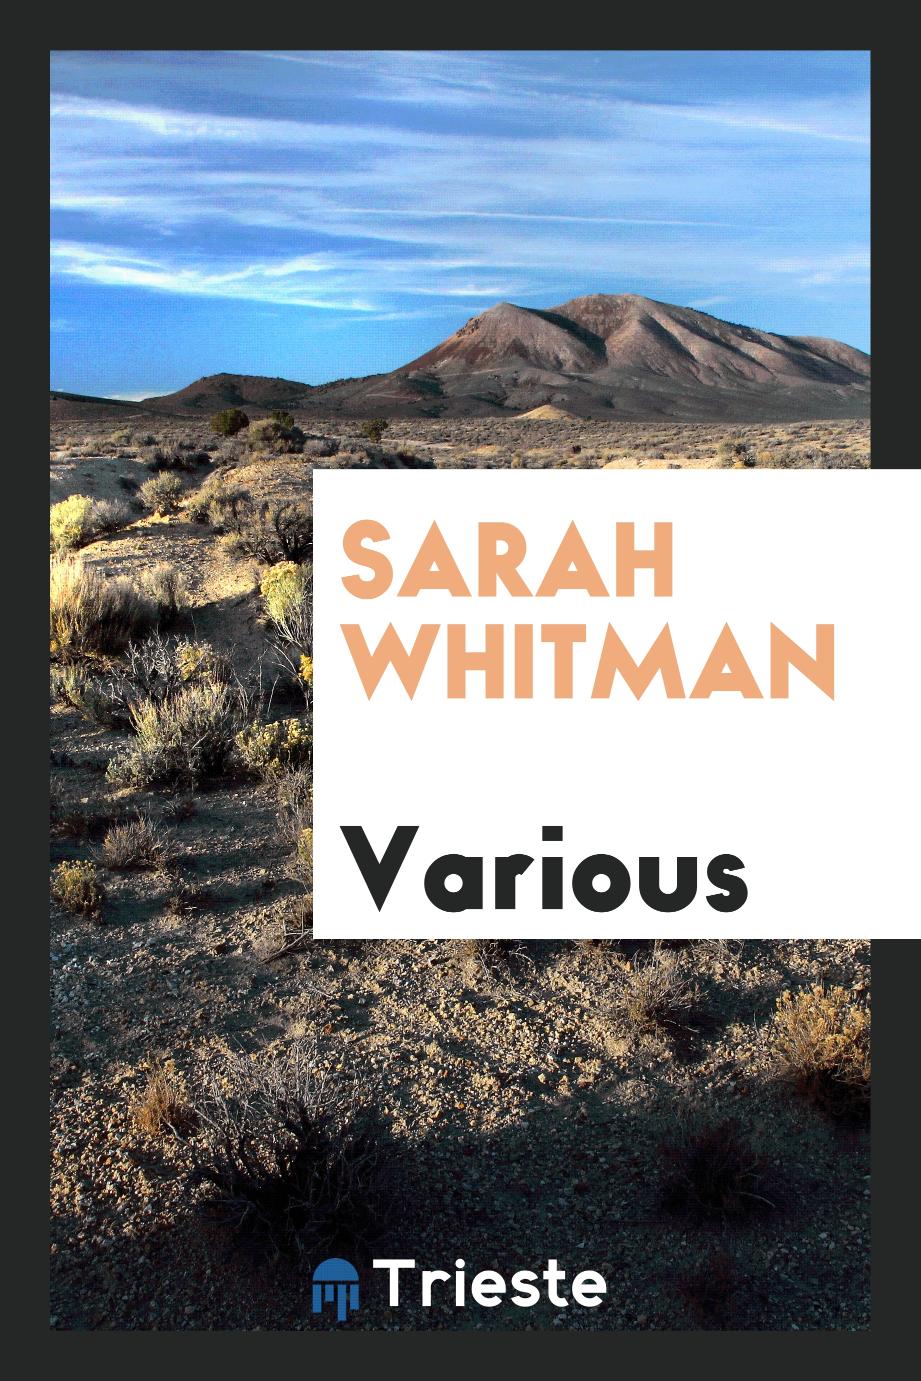 Sarah Whitman